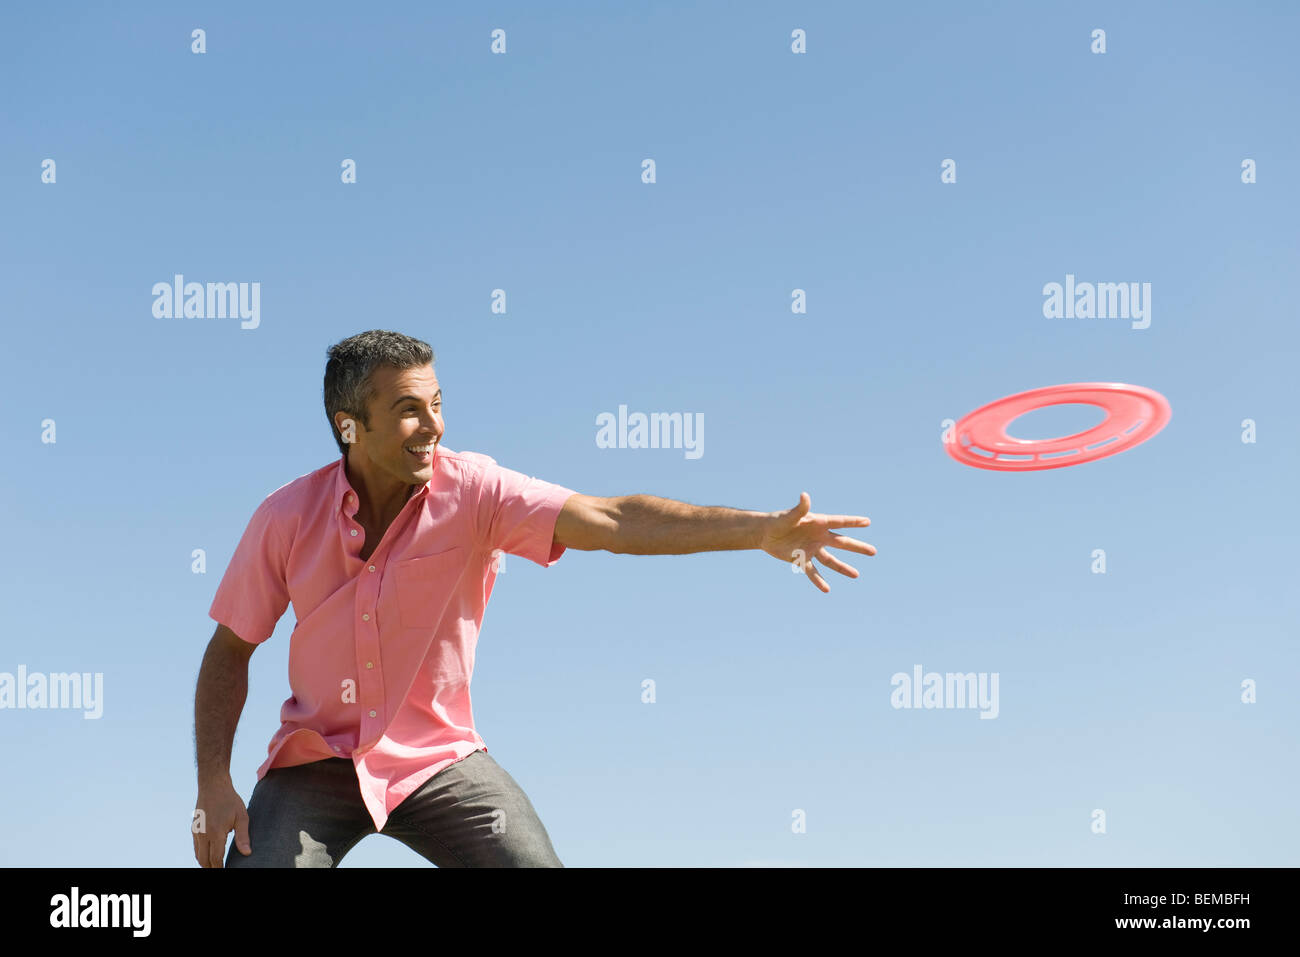 Man throwing flying disc Stock Photo